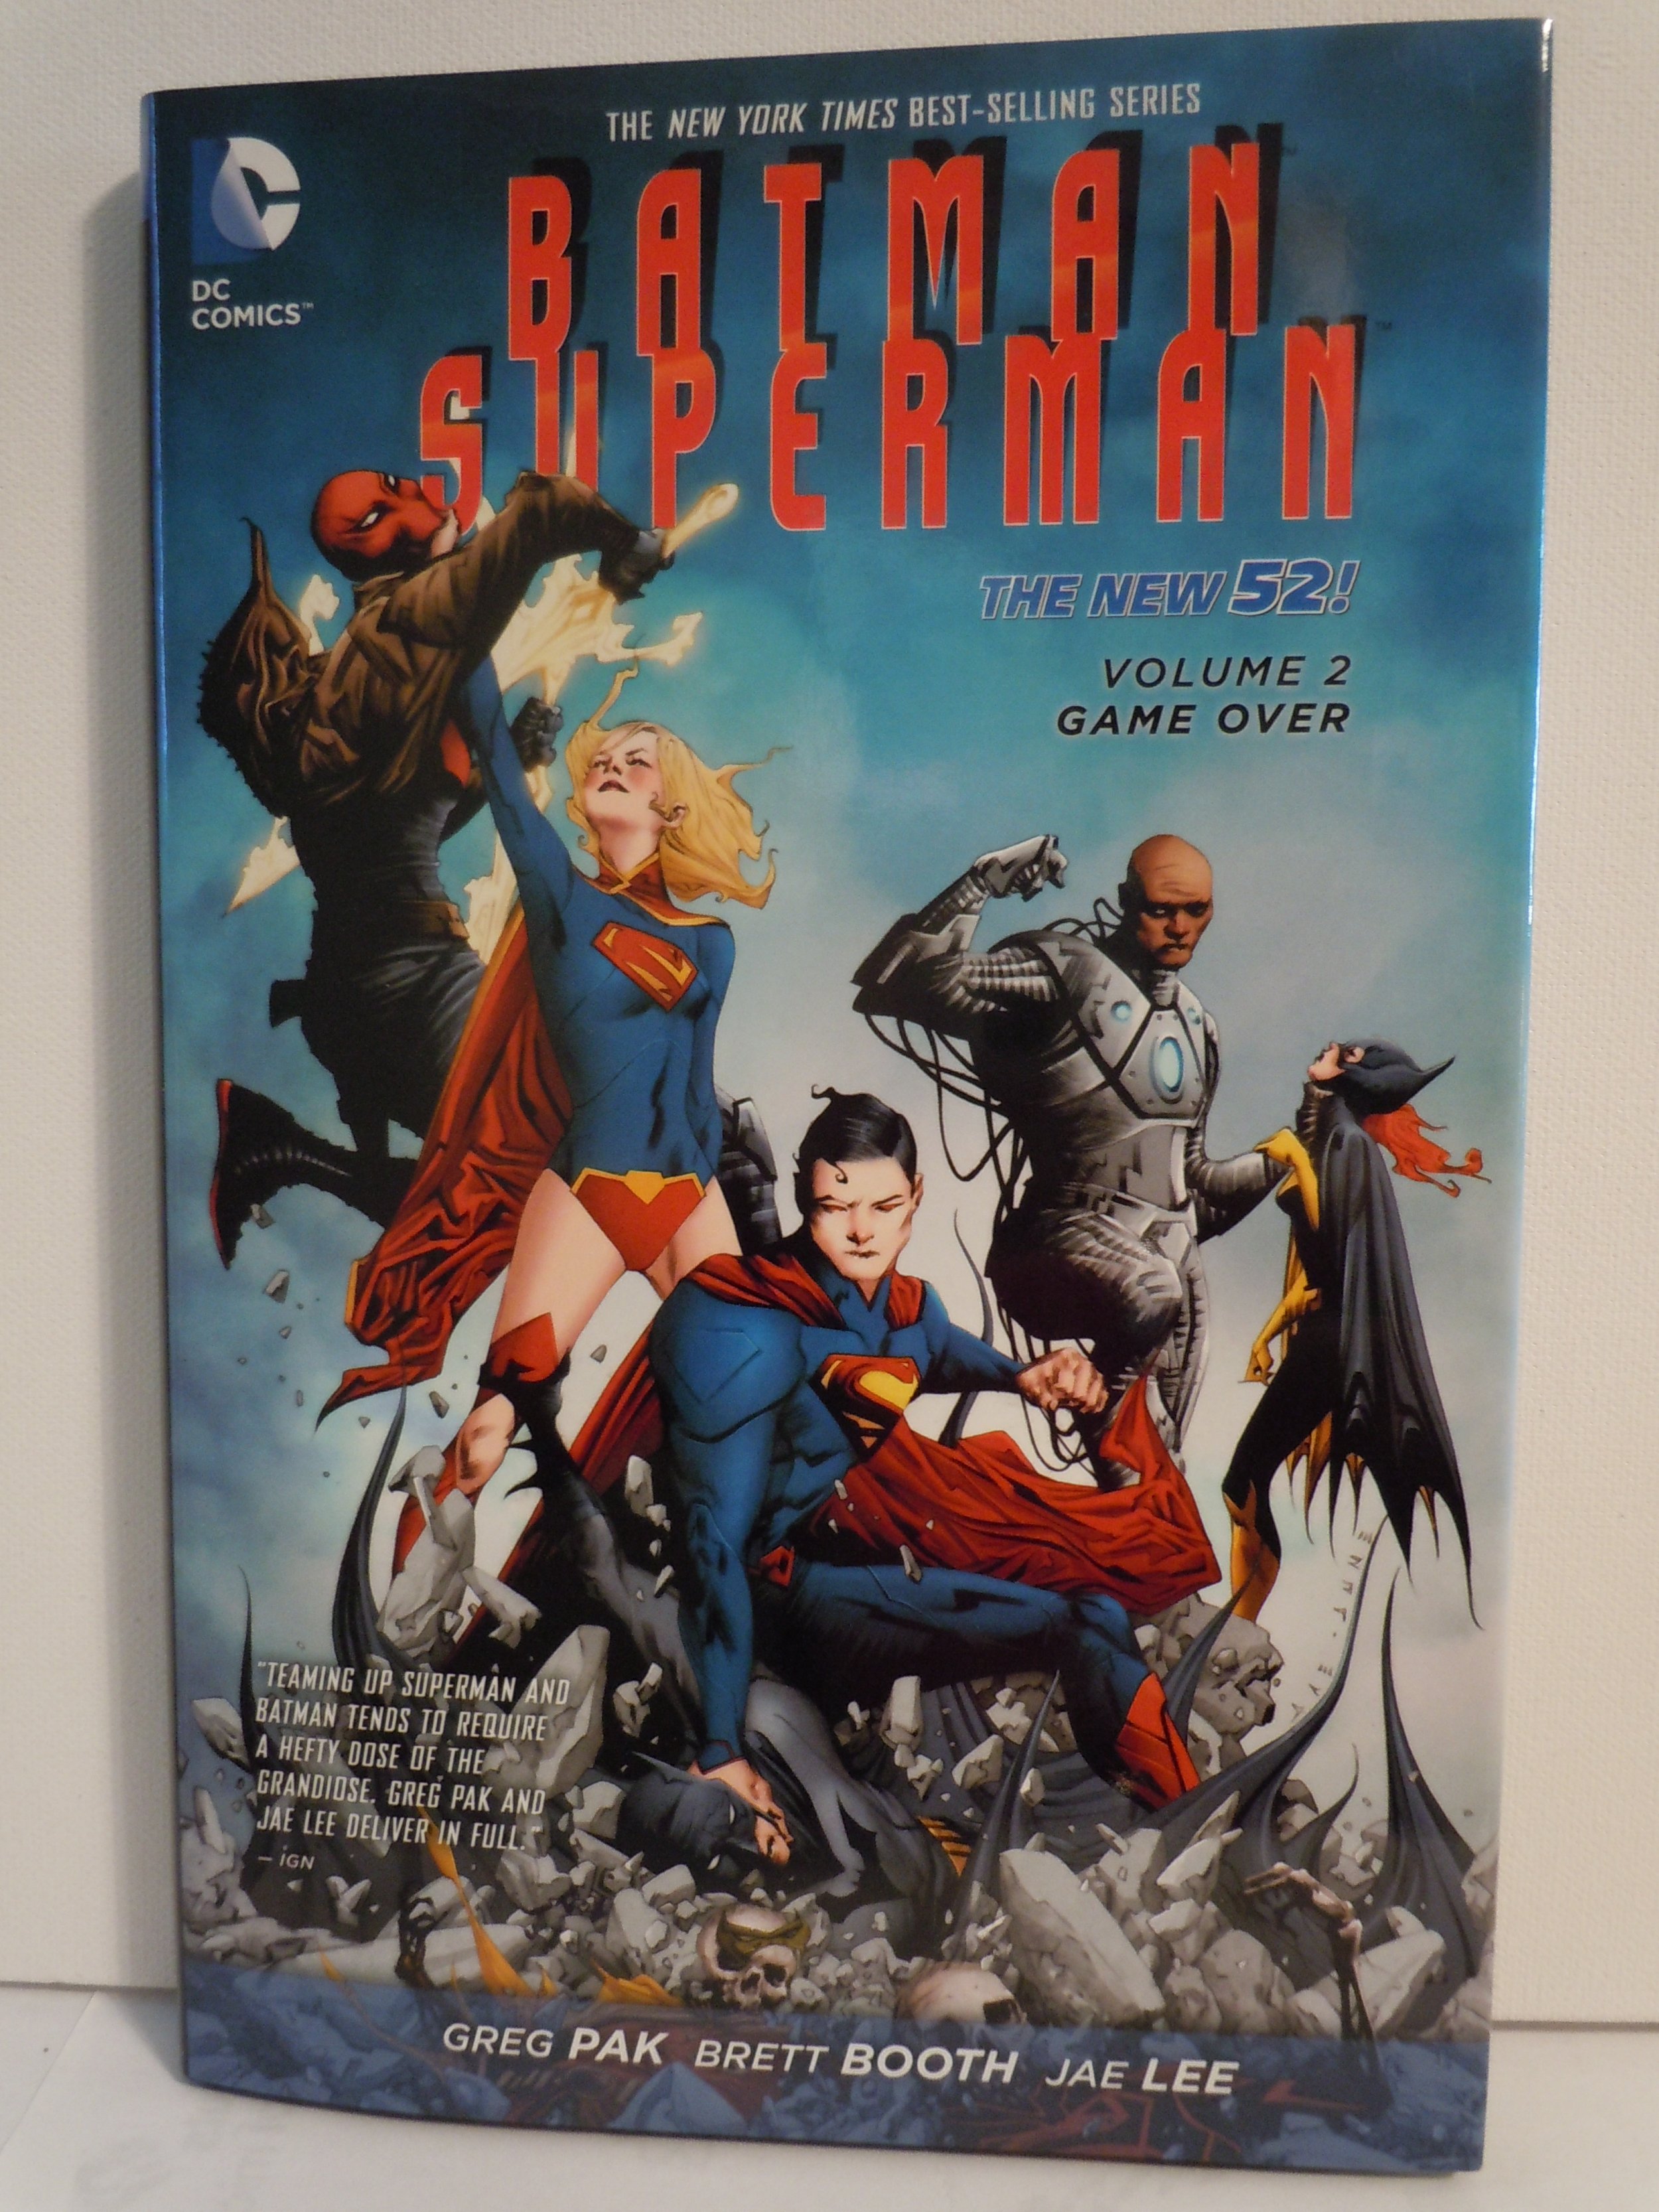 Twinkelen Site lijn innovatie Batman Superman Vol. 2 Endgame Hardcover | Comic Books - Modern Age, DC  Comics, Batman, Superhero / HipComic